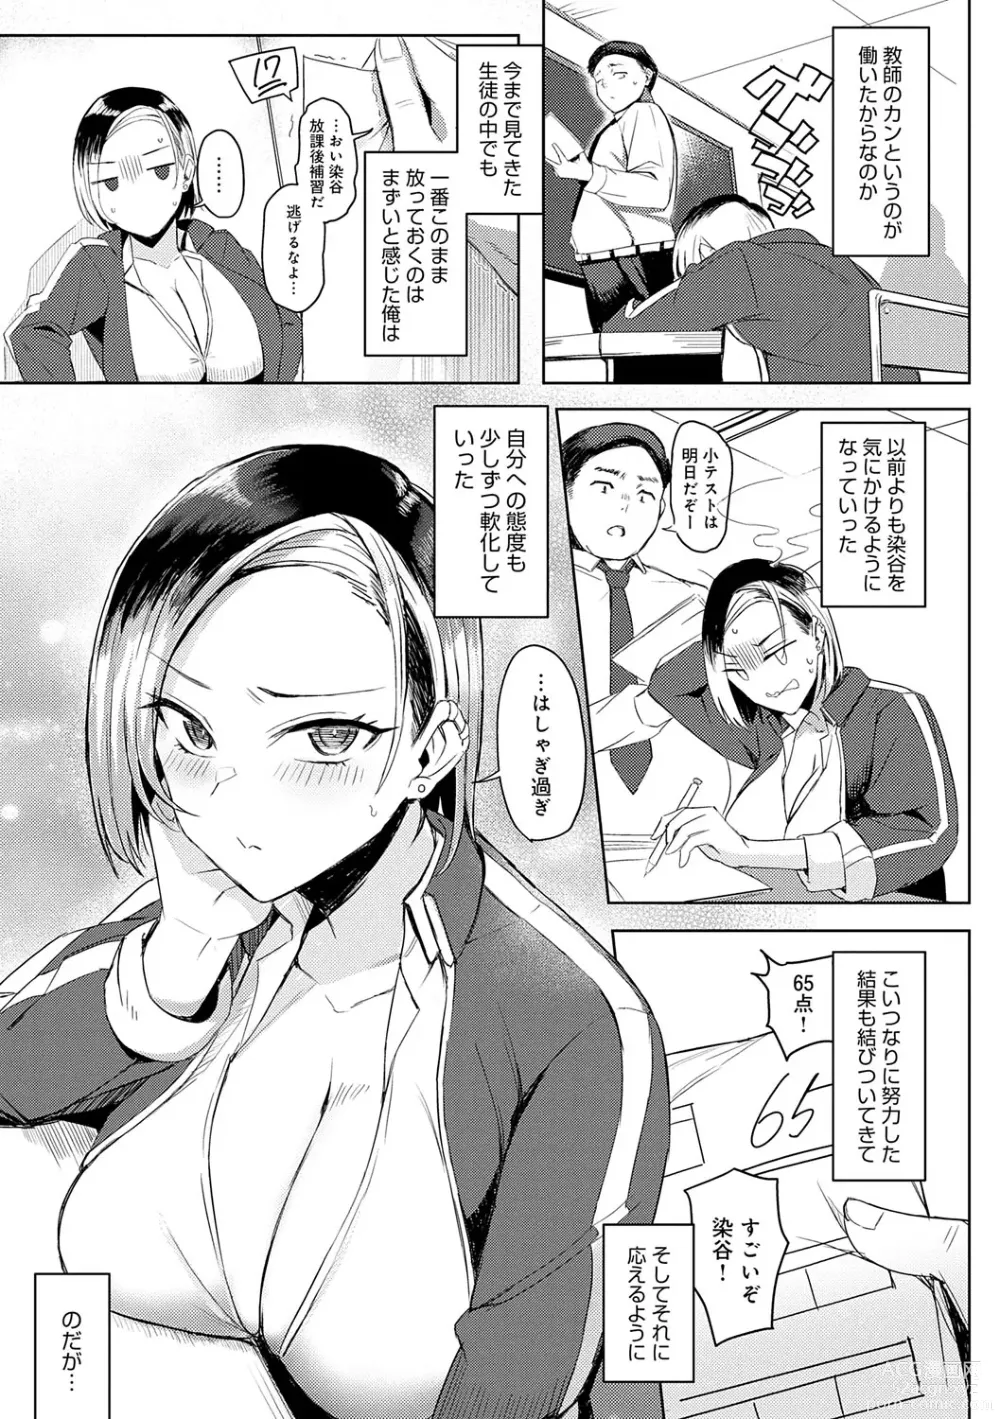 Page 6 of manga Hamerare x Hamaru